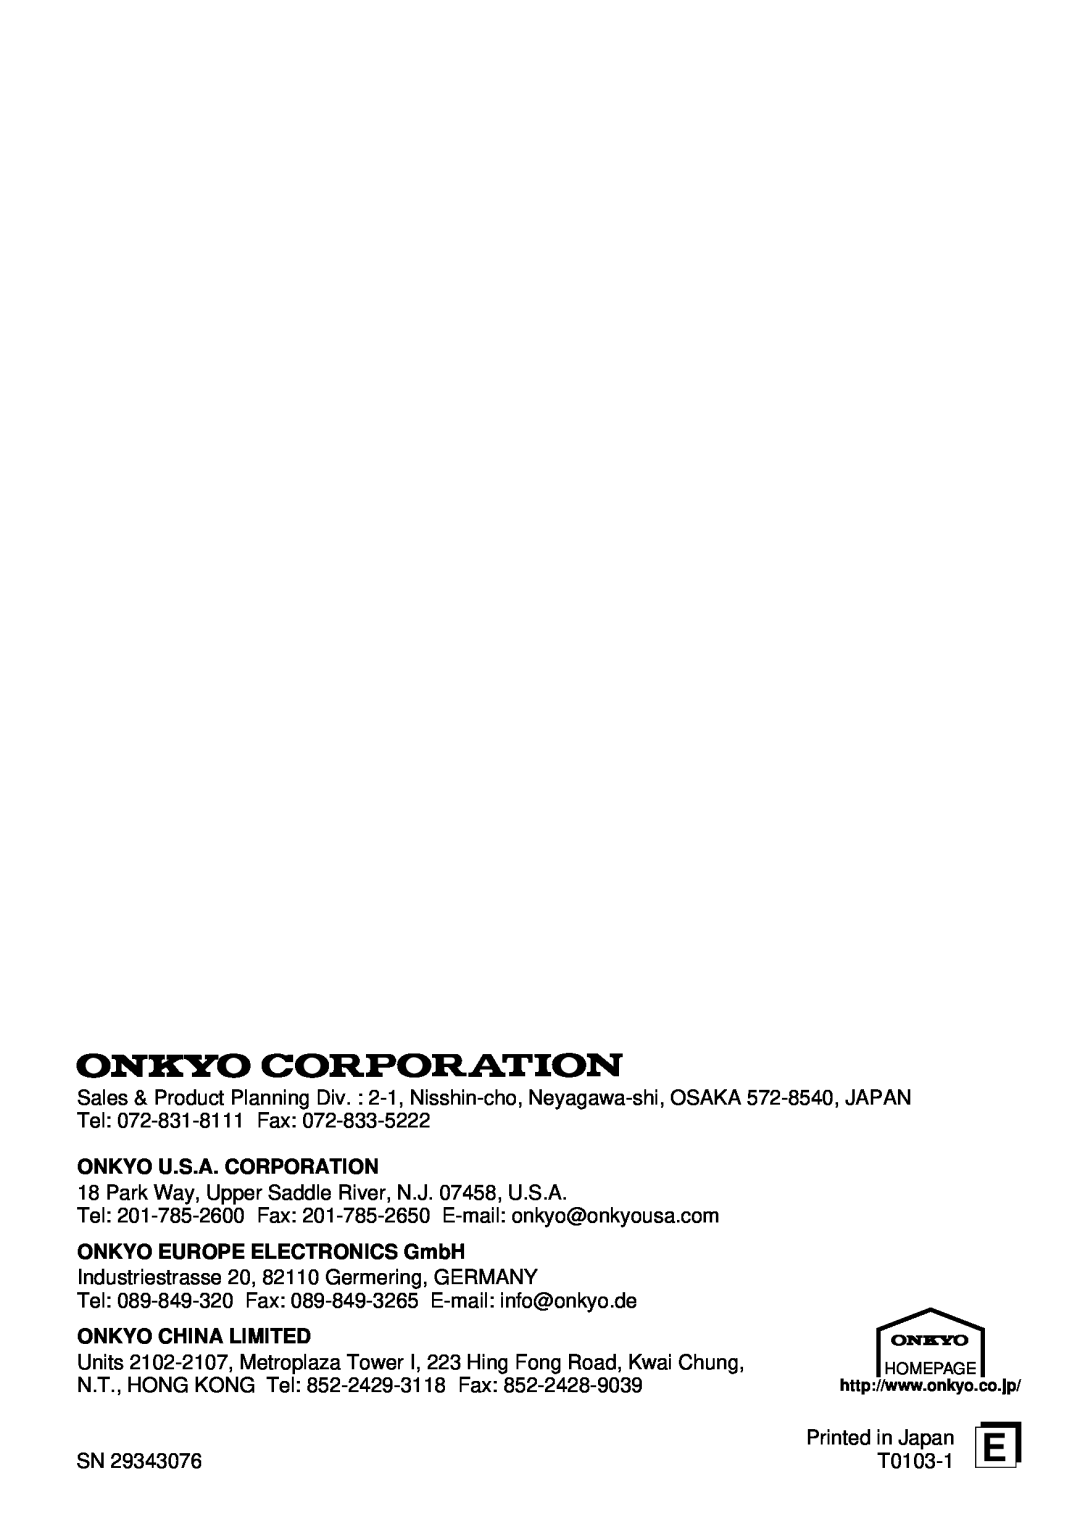 Onkyo K-505TX instruction manual Onkyo U.S.A. Corporation, ONKYO EUROPE ELECTRONICS GmbH, Onkyo China Limited 